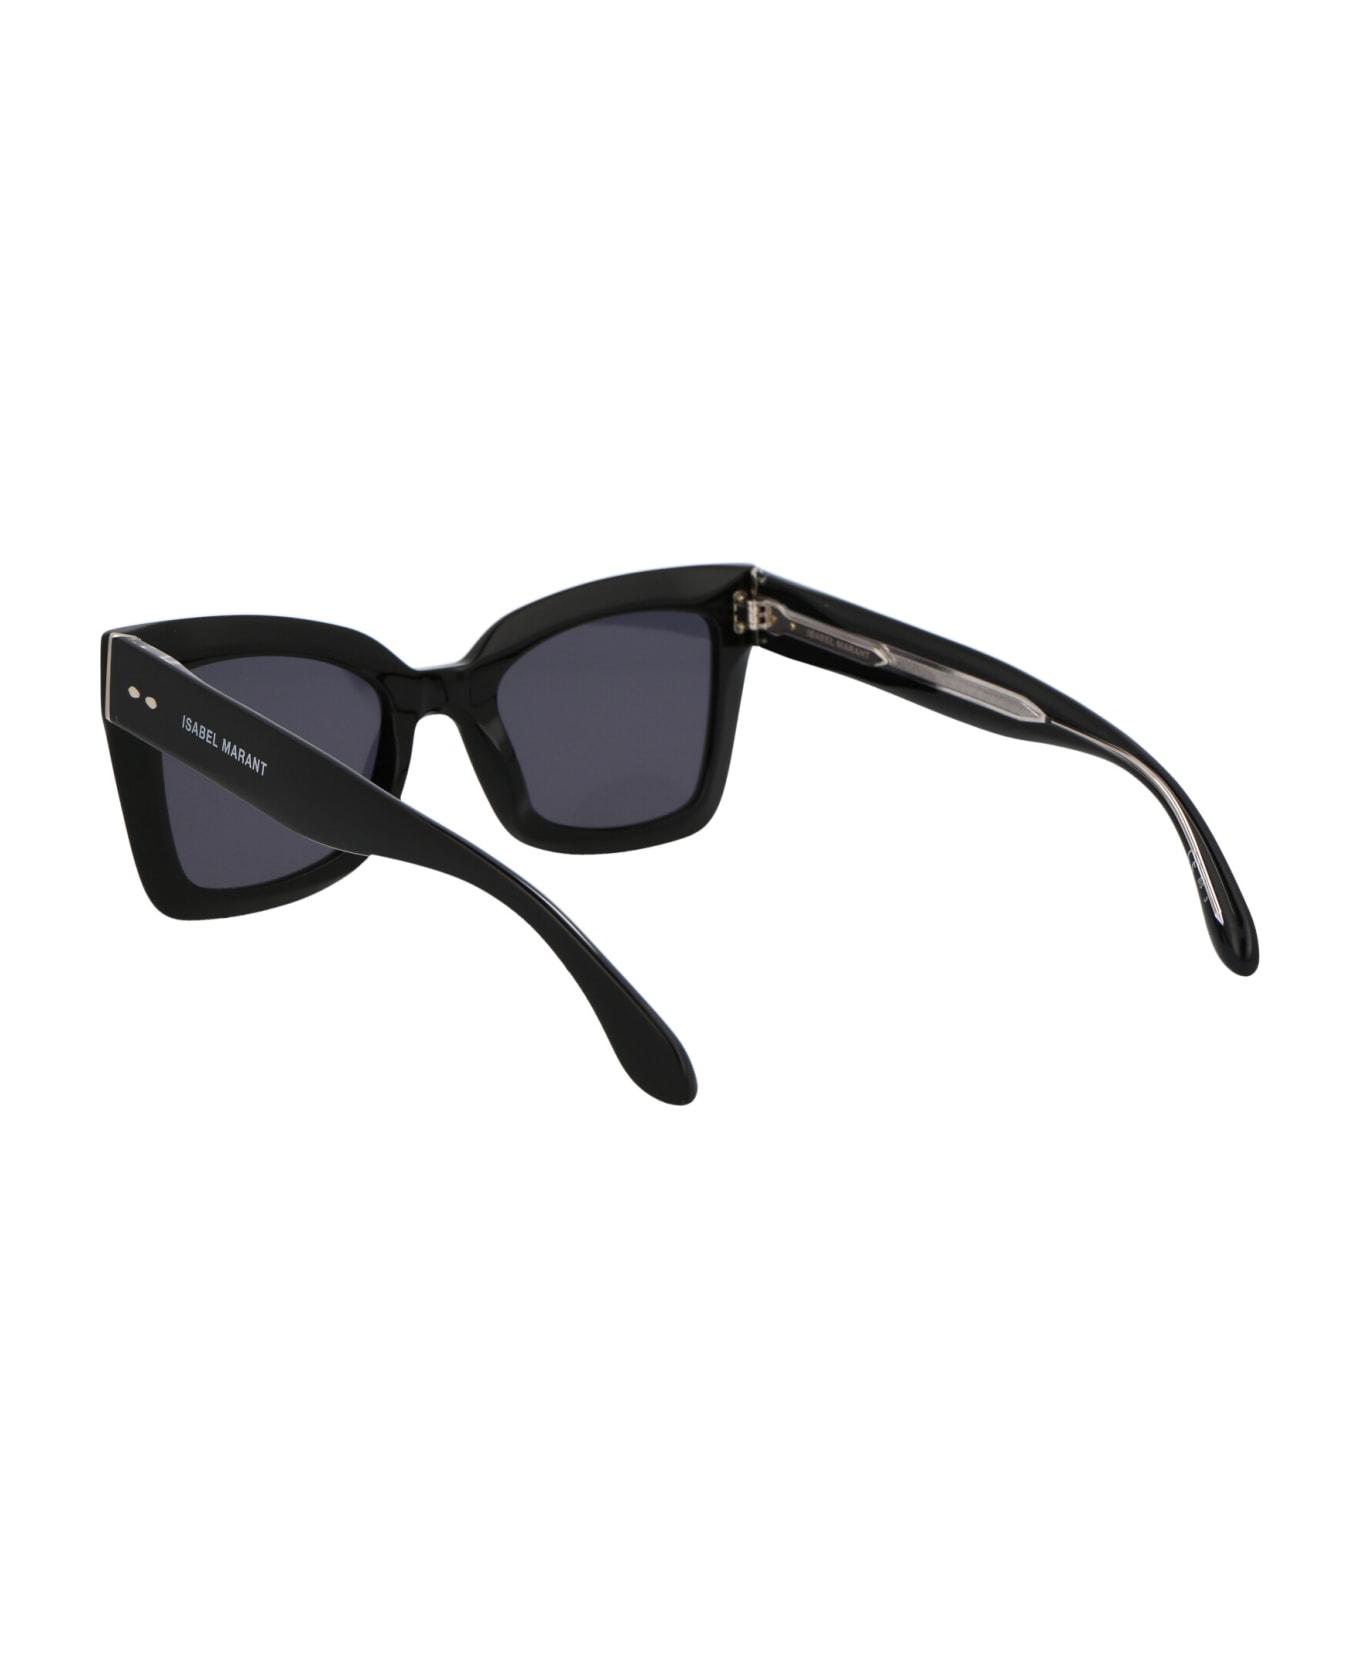 Isabel Marant Im 0103/s Sunglasses - 807IR BLACK サングラス